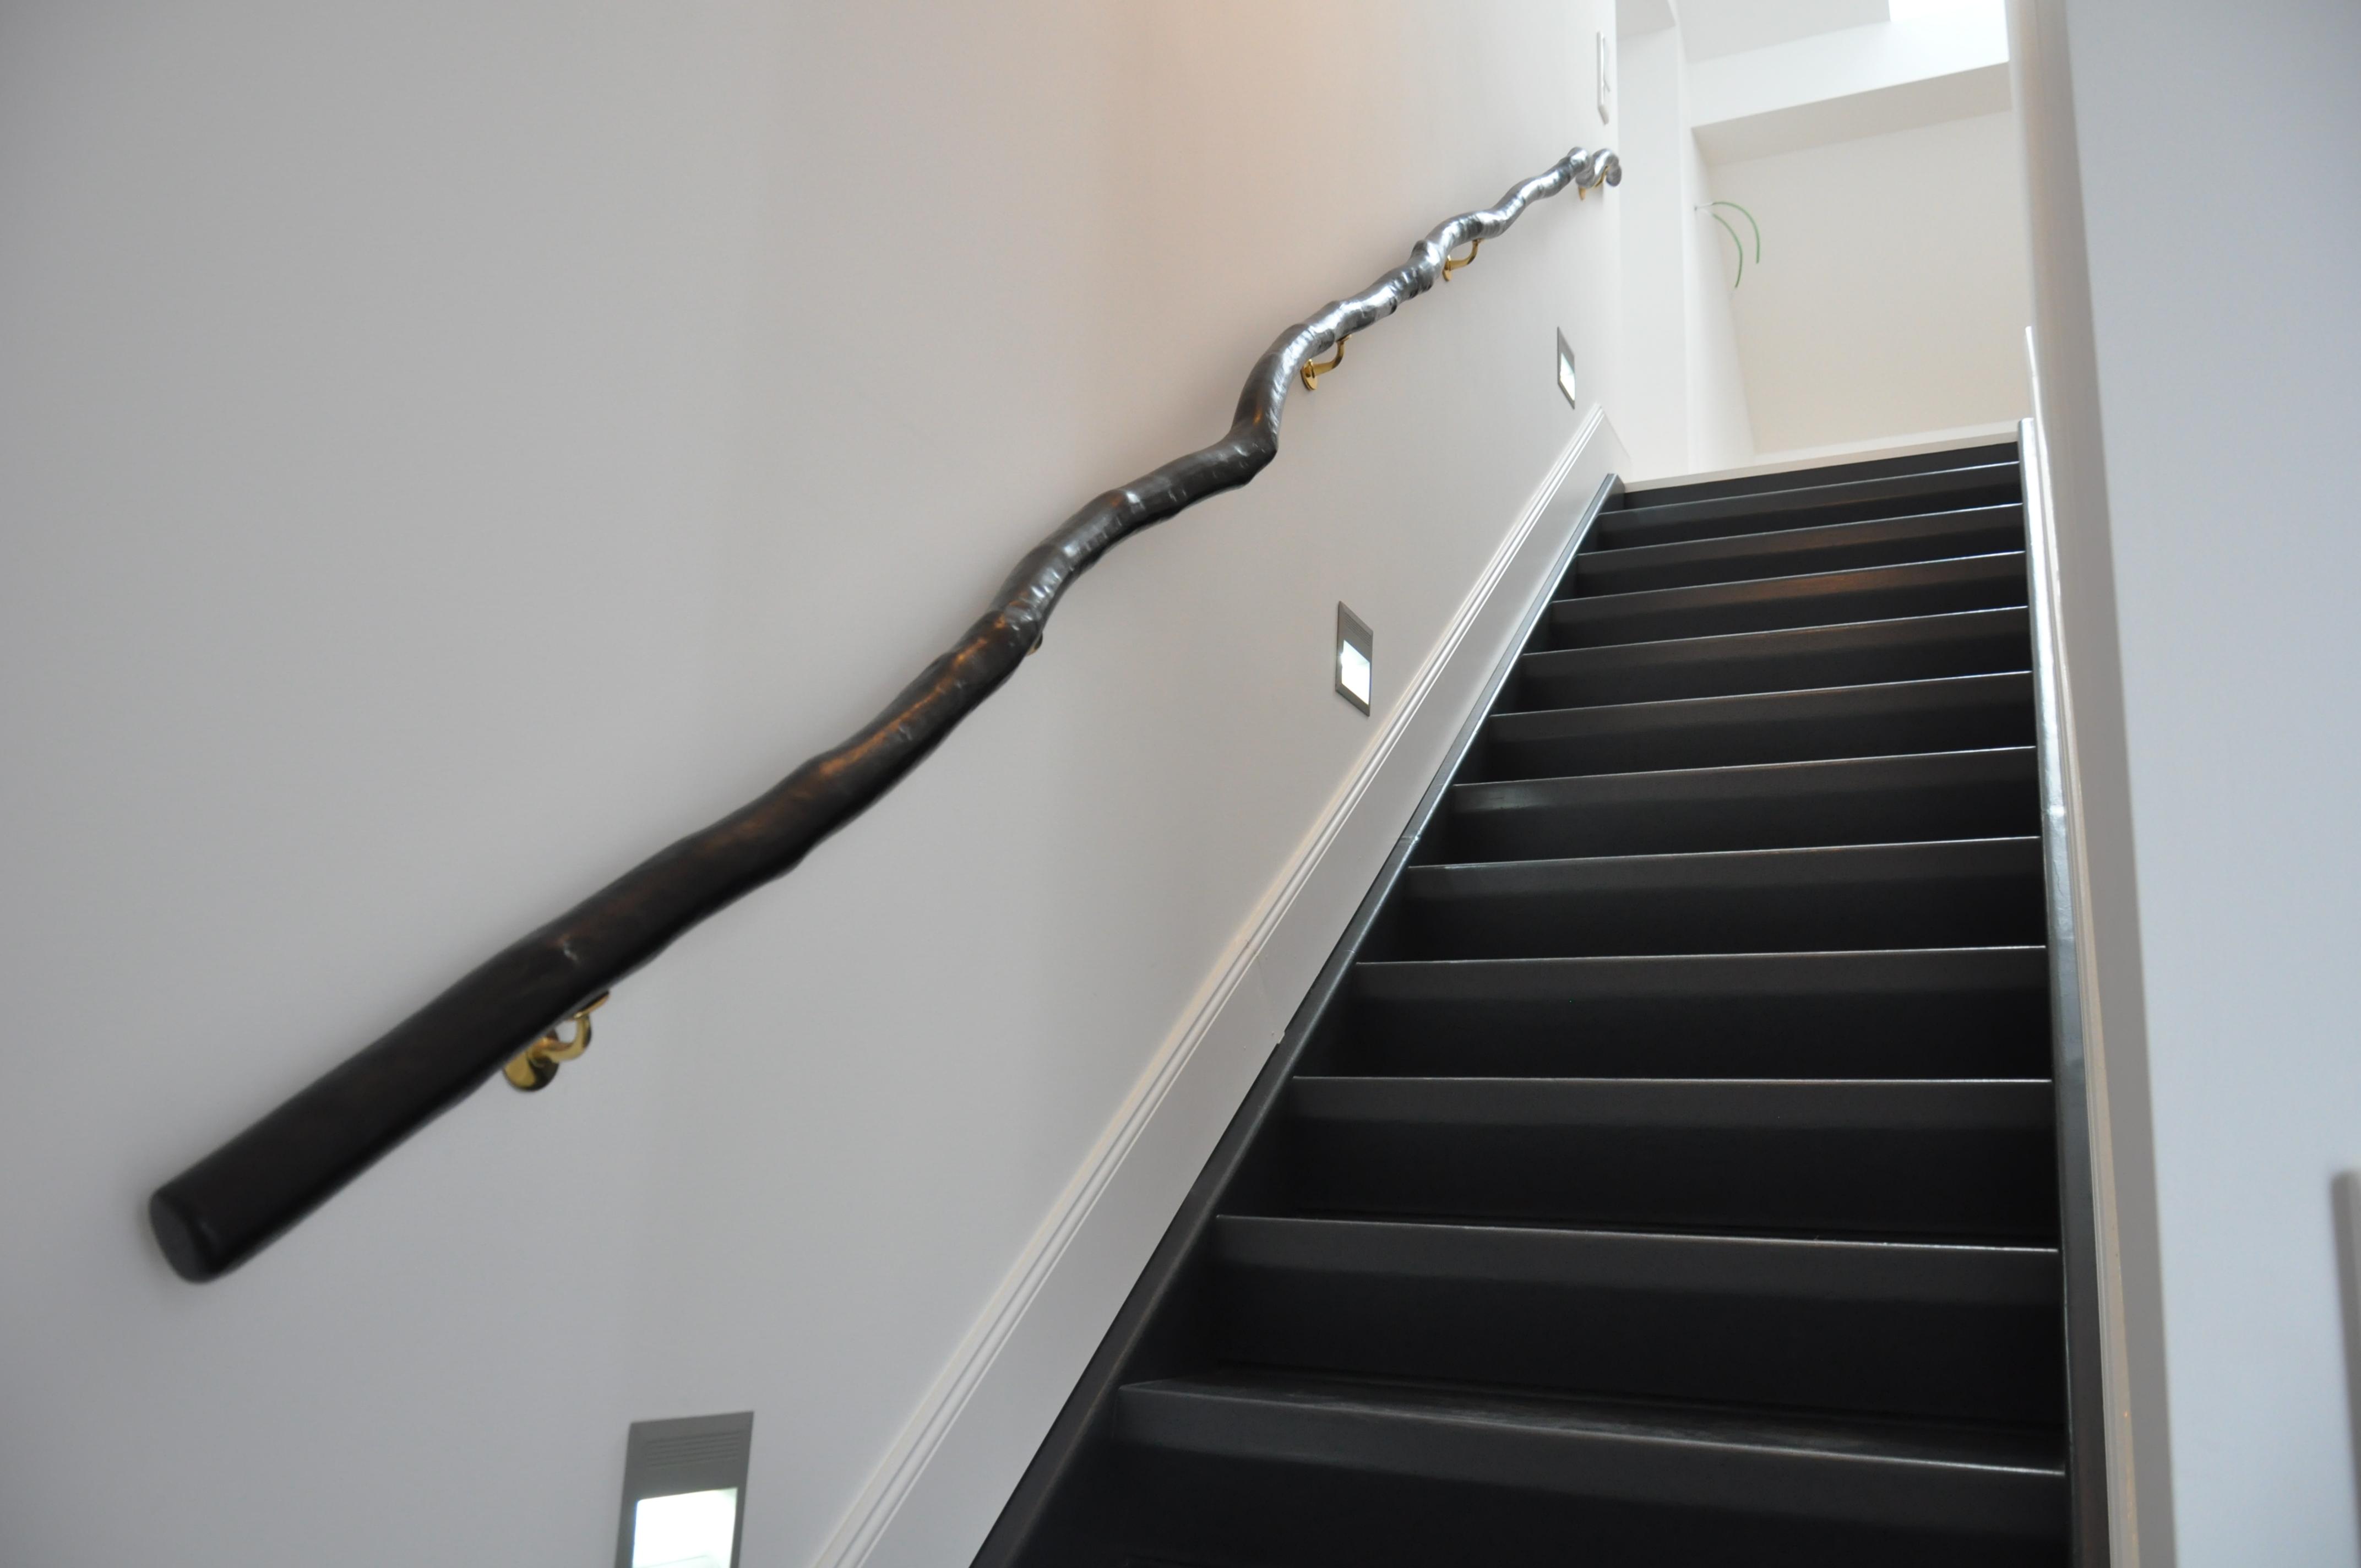 Versteckte Treppe im Wohlfühl Fabrik Loft 210qm zu mieten #handlauf #treppenbeleuchtung ©Tatjana Adelt